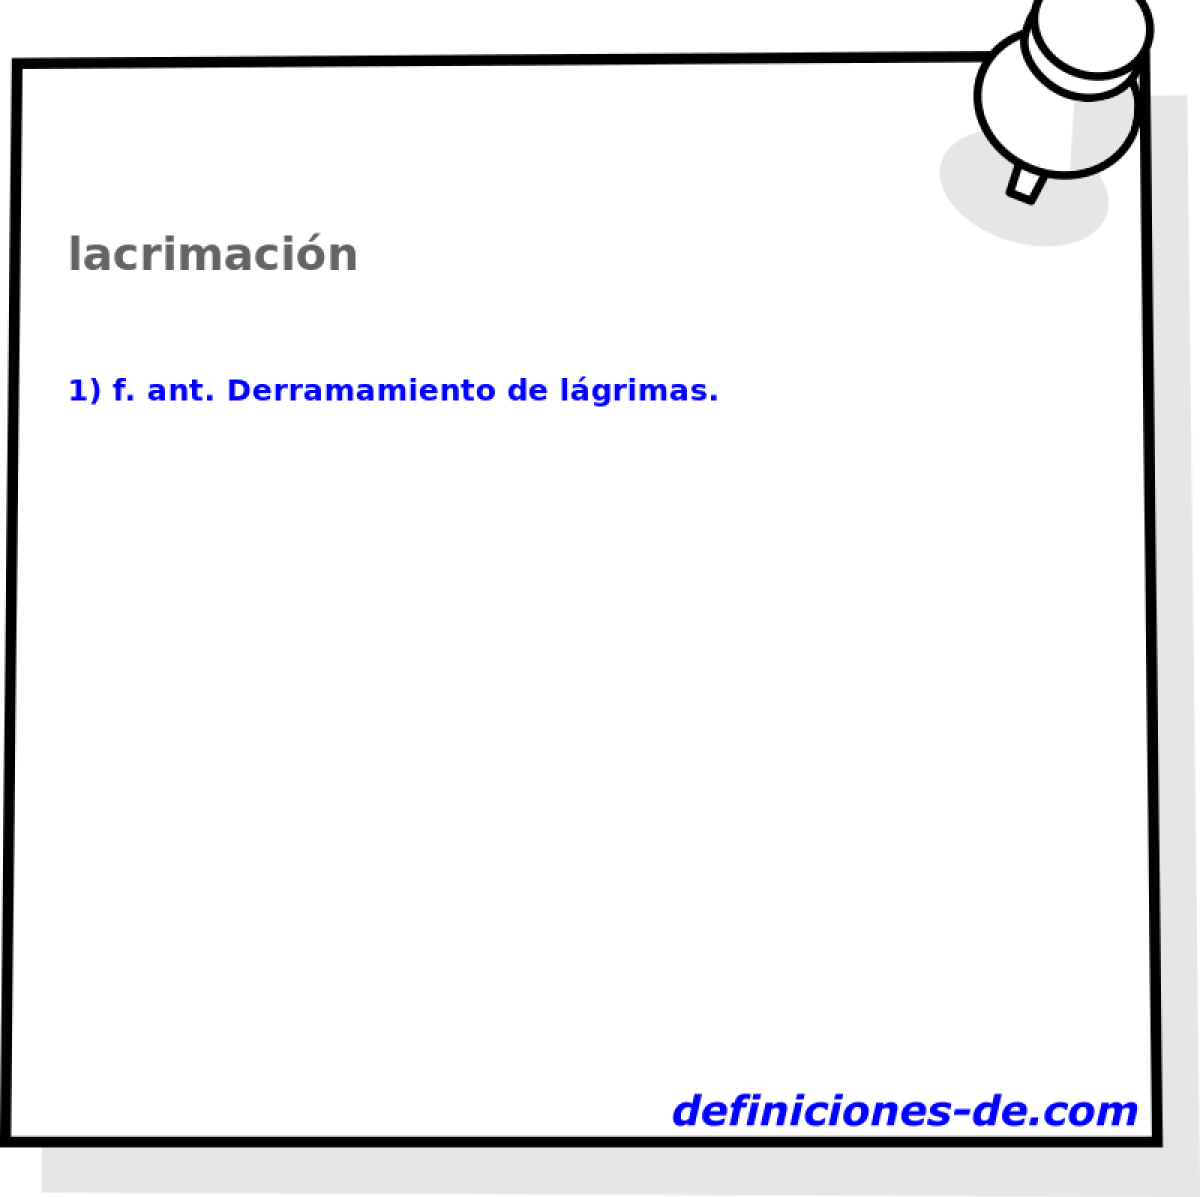 lacrimacin 